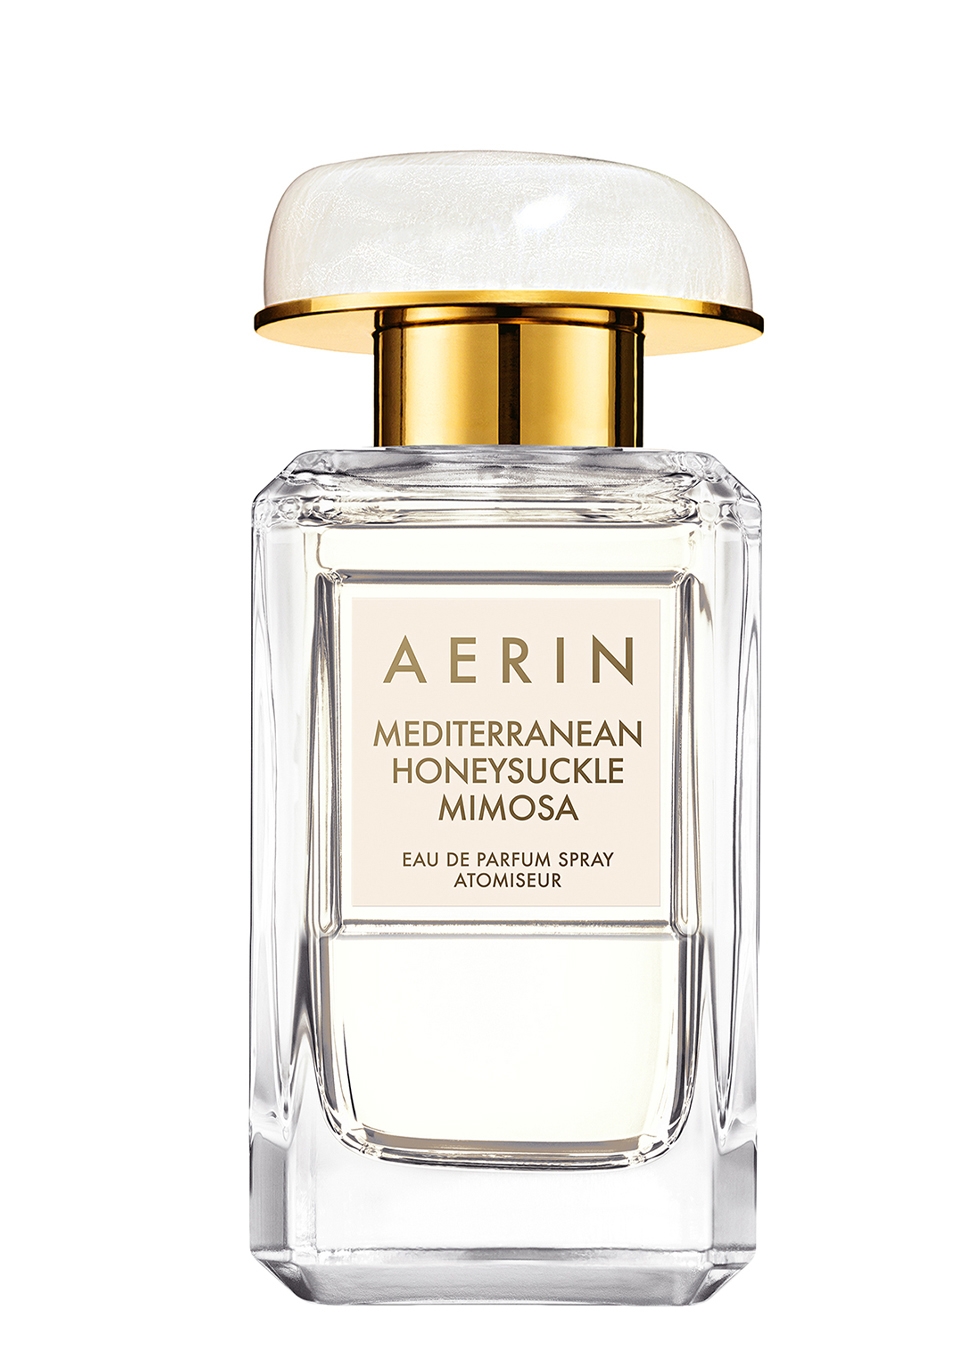 Aerin Mediterranean Honeysuckle Mimosa Eau De Parfum Sweet Feminine Fragrance Scent Perfume For Her